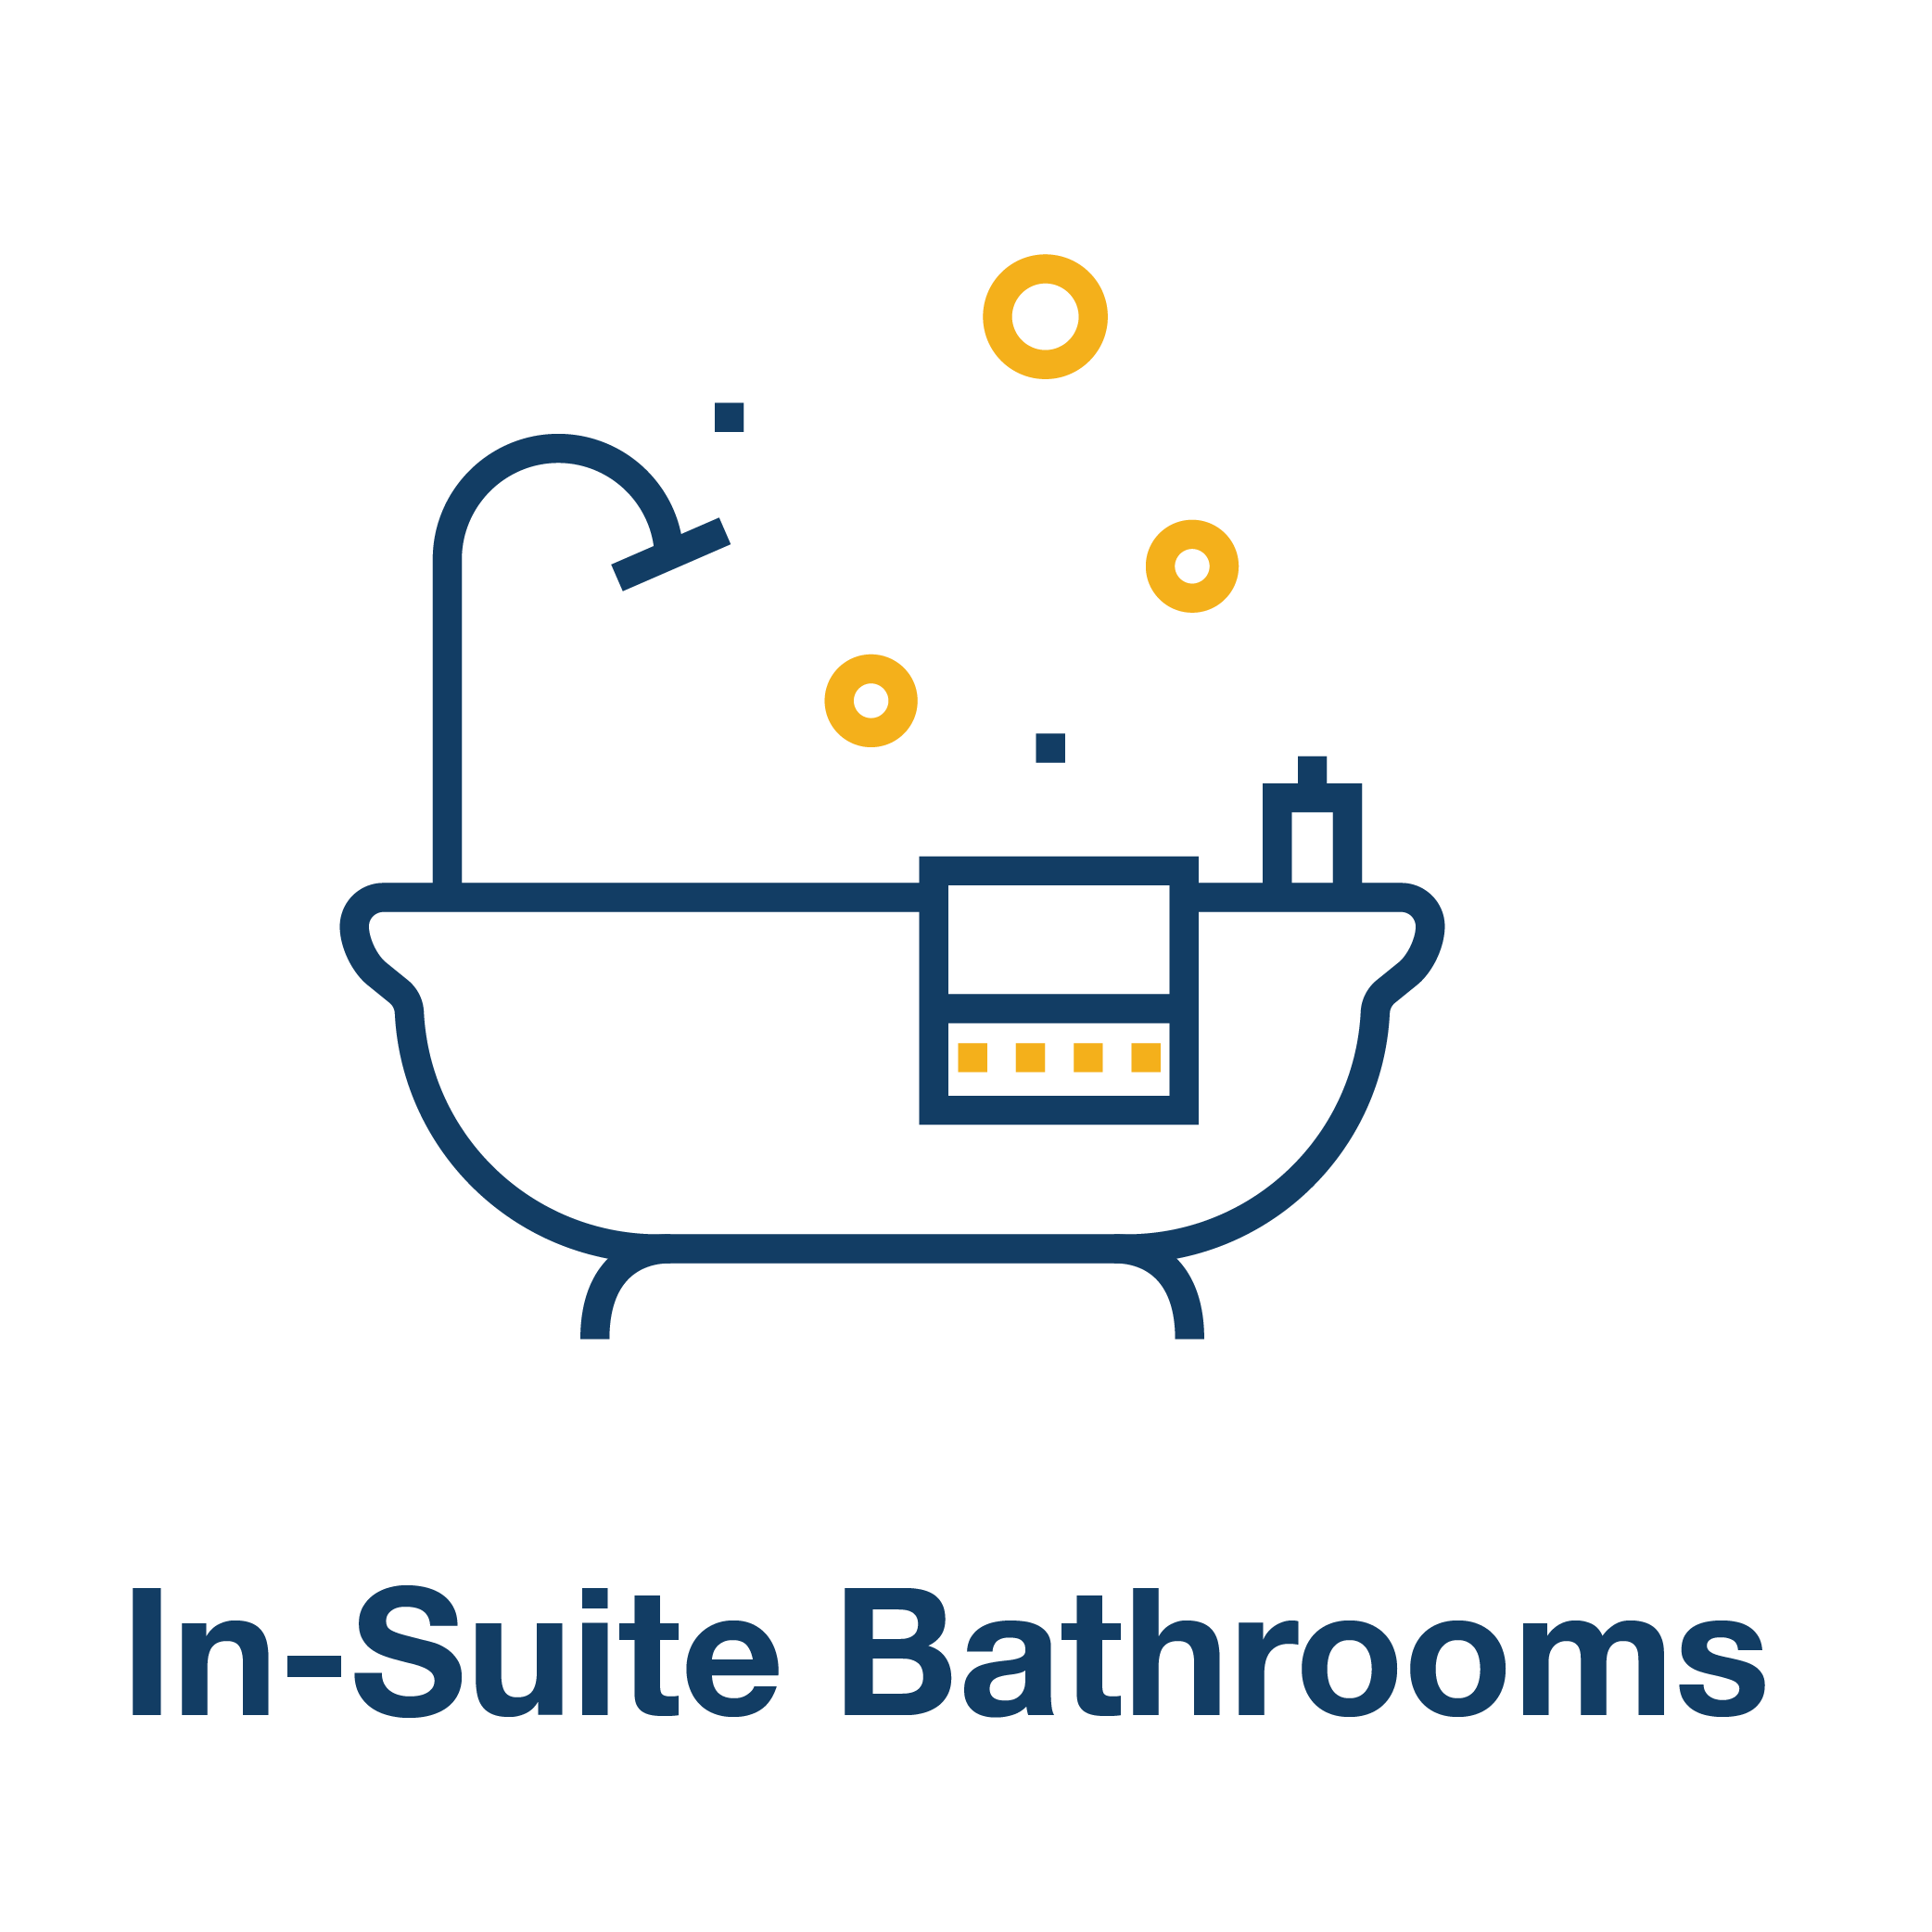 In-Suite Bathrooms